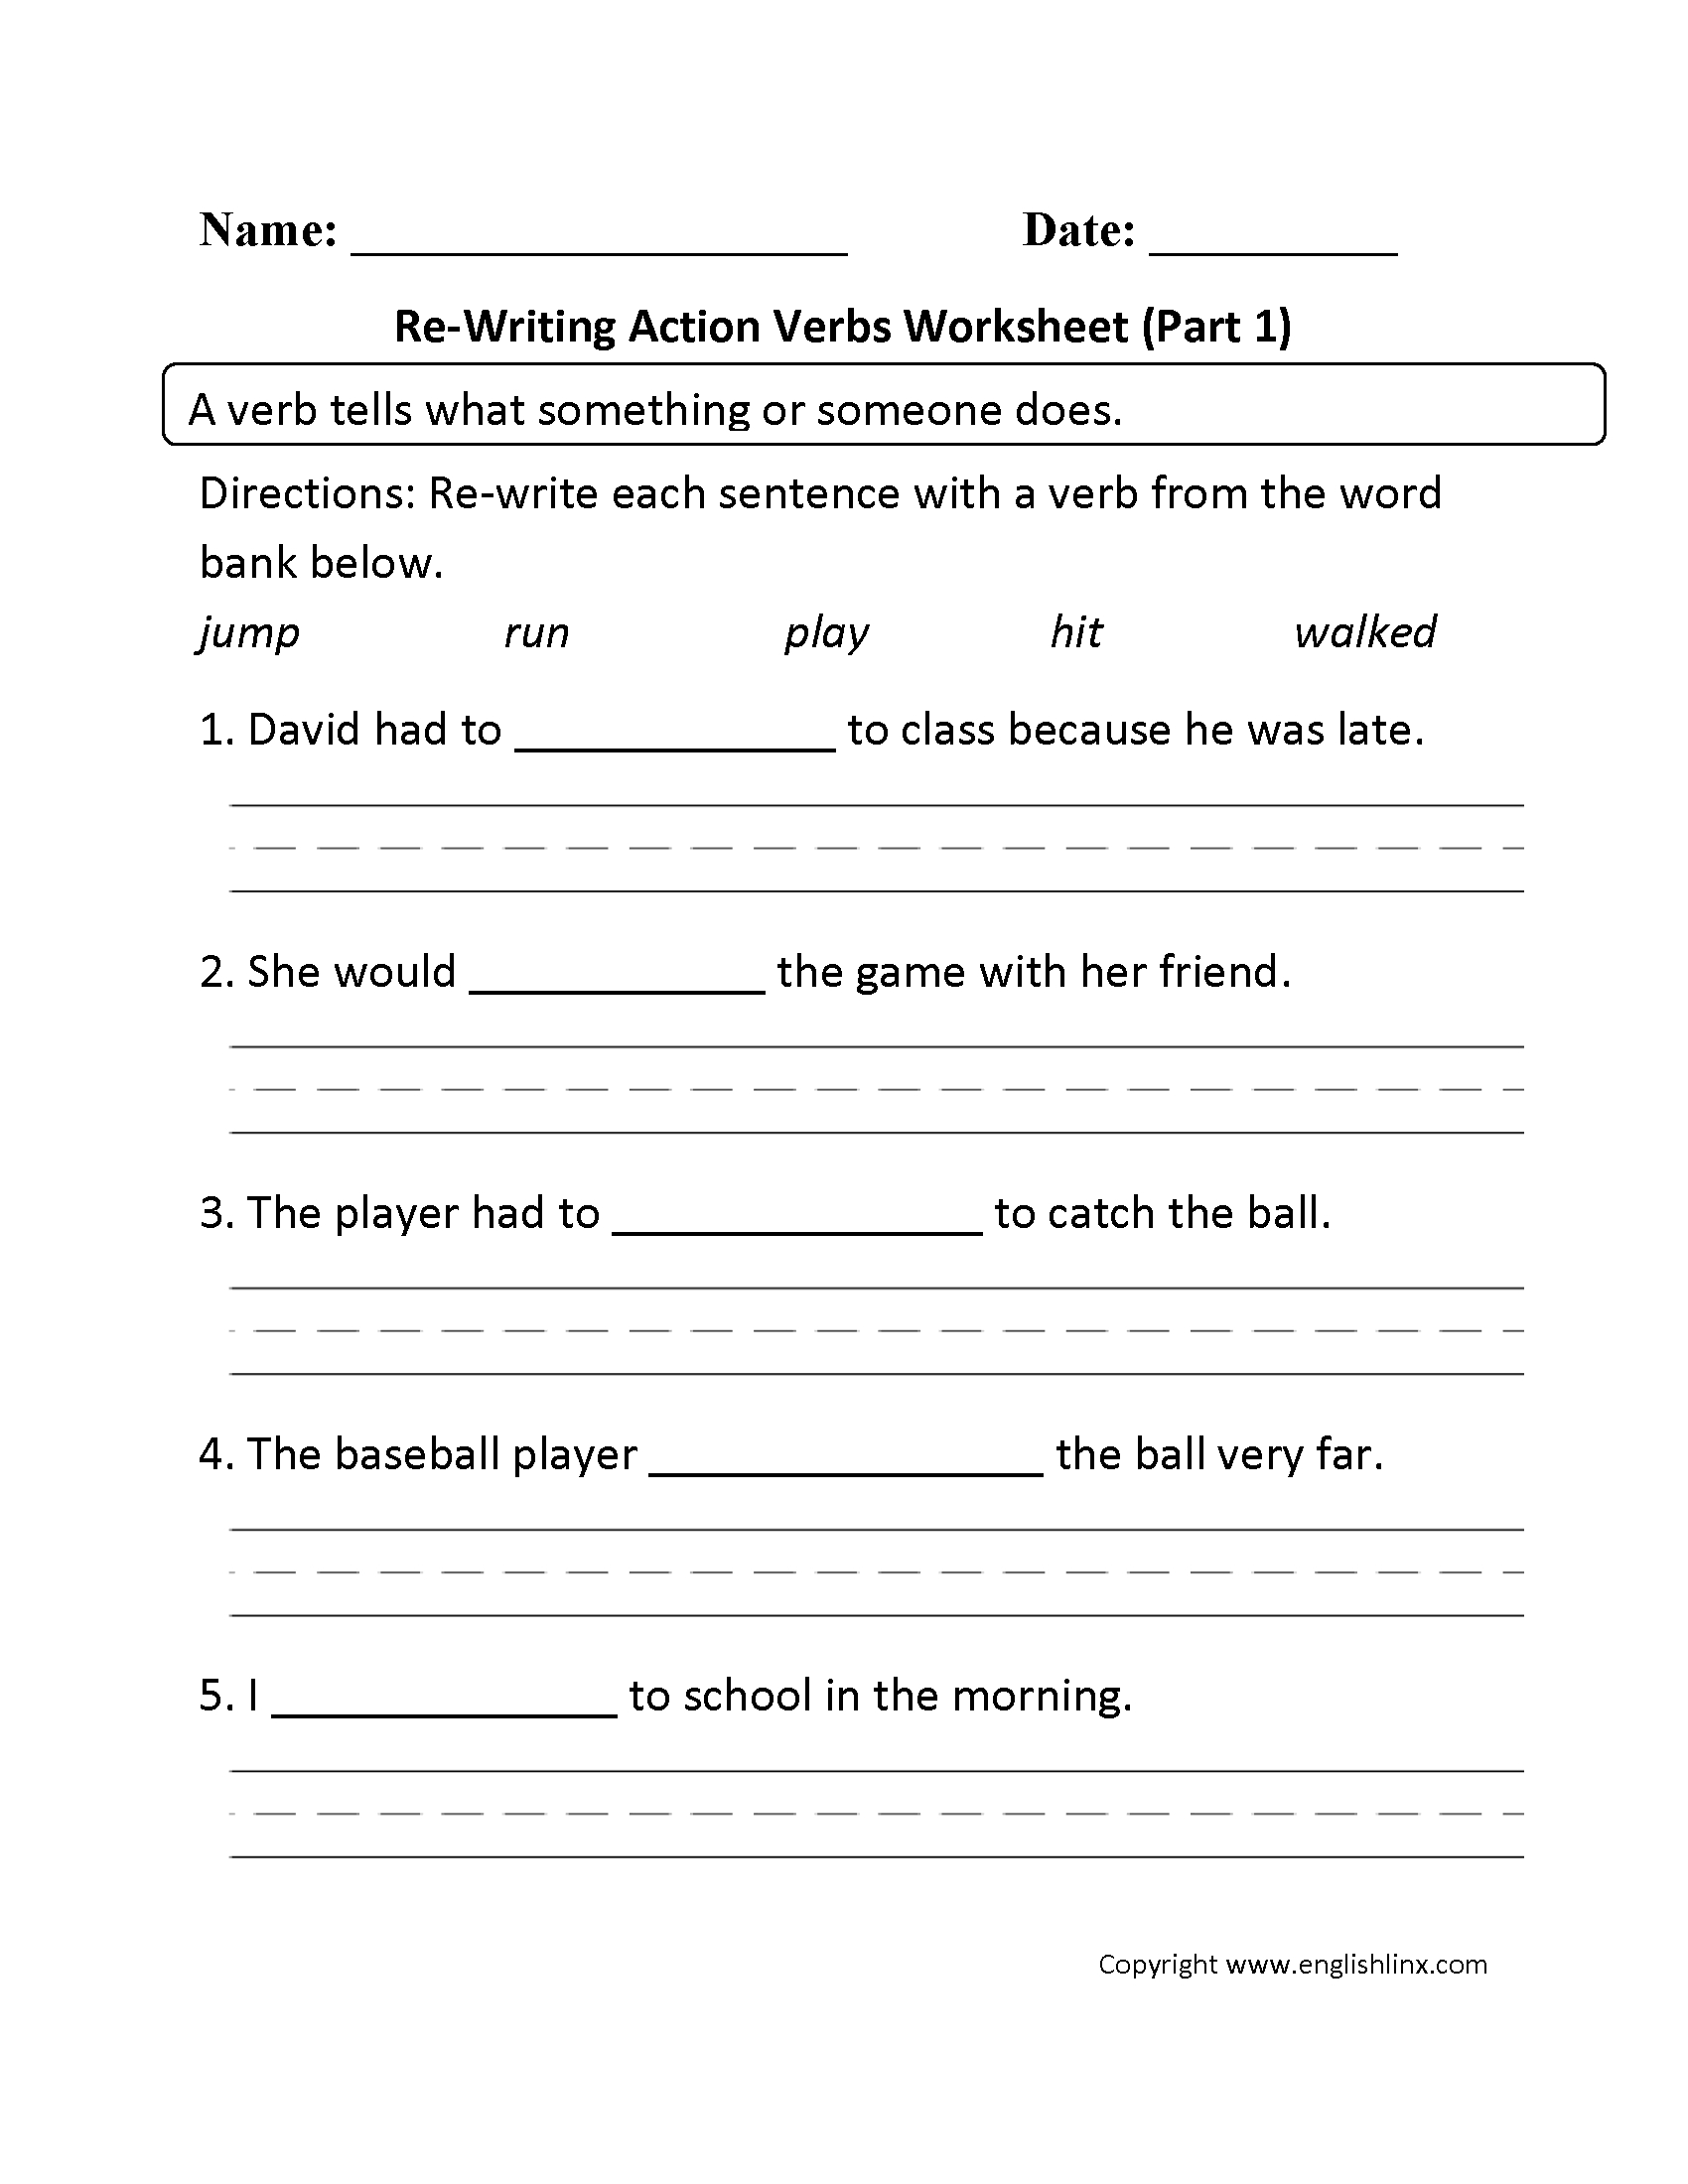 Action Verbs Worksheets | Re-Writing Action Verbs Worksheet